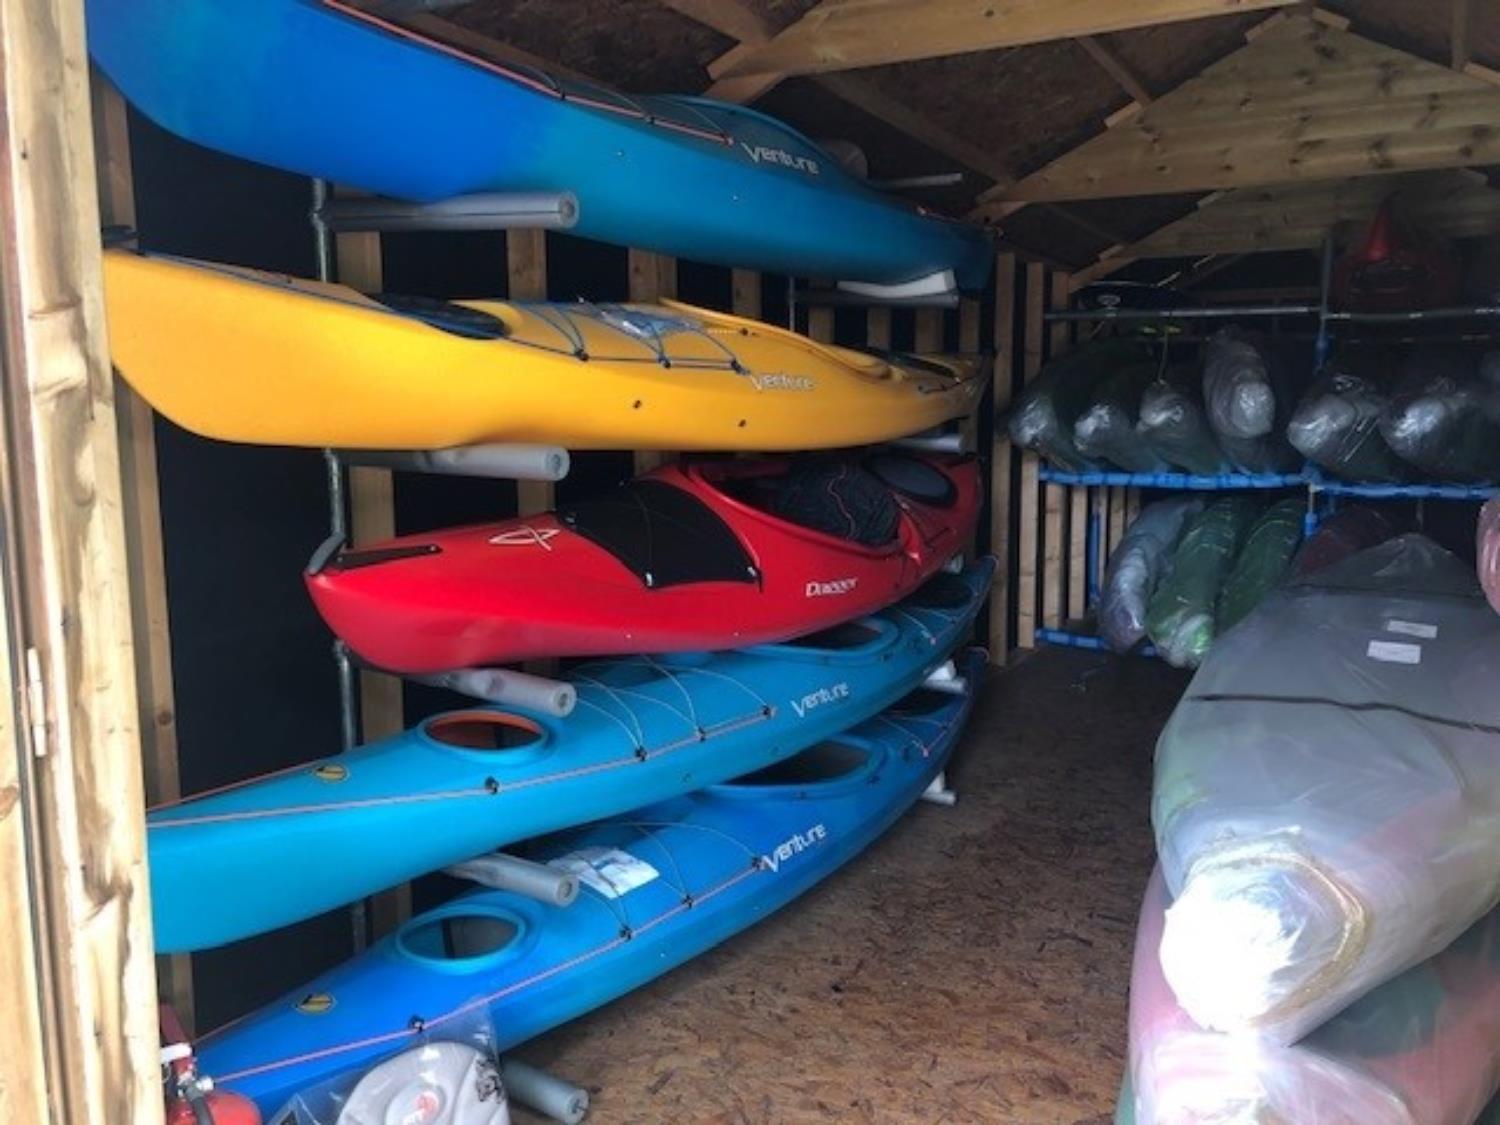 Kayaking Accessories, Cornish Kayaks